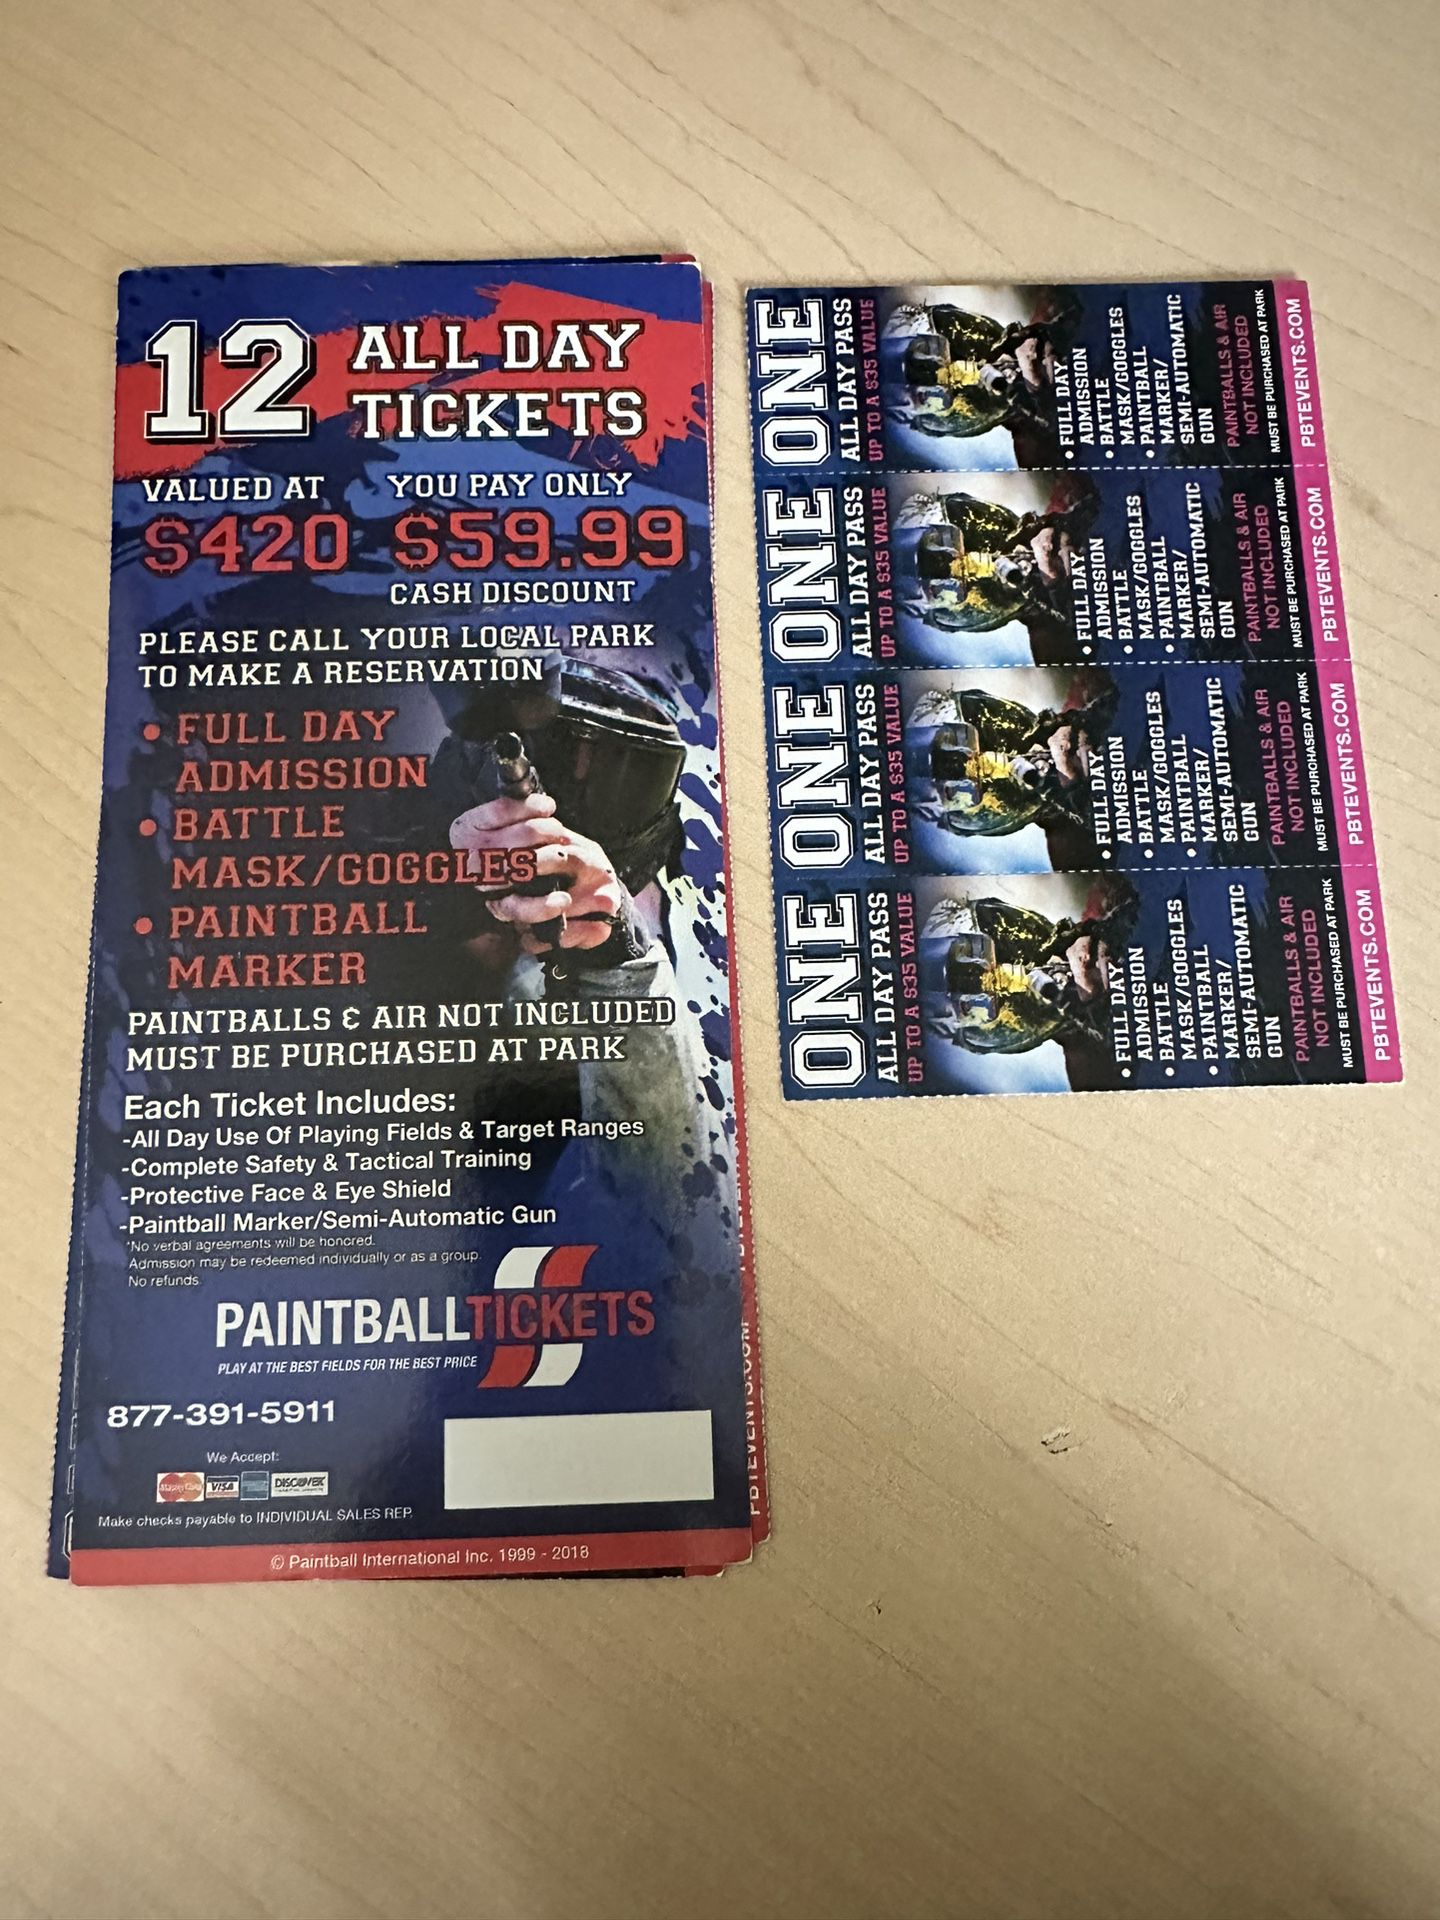 Paintball Tickets